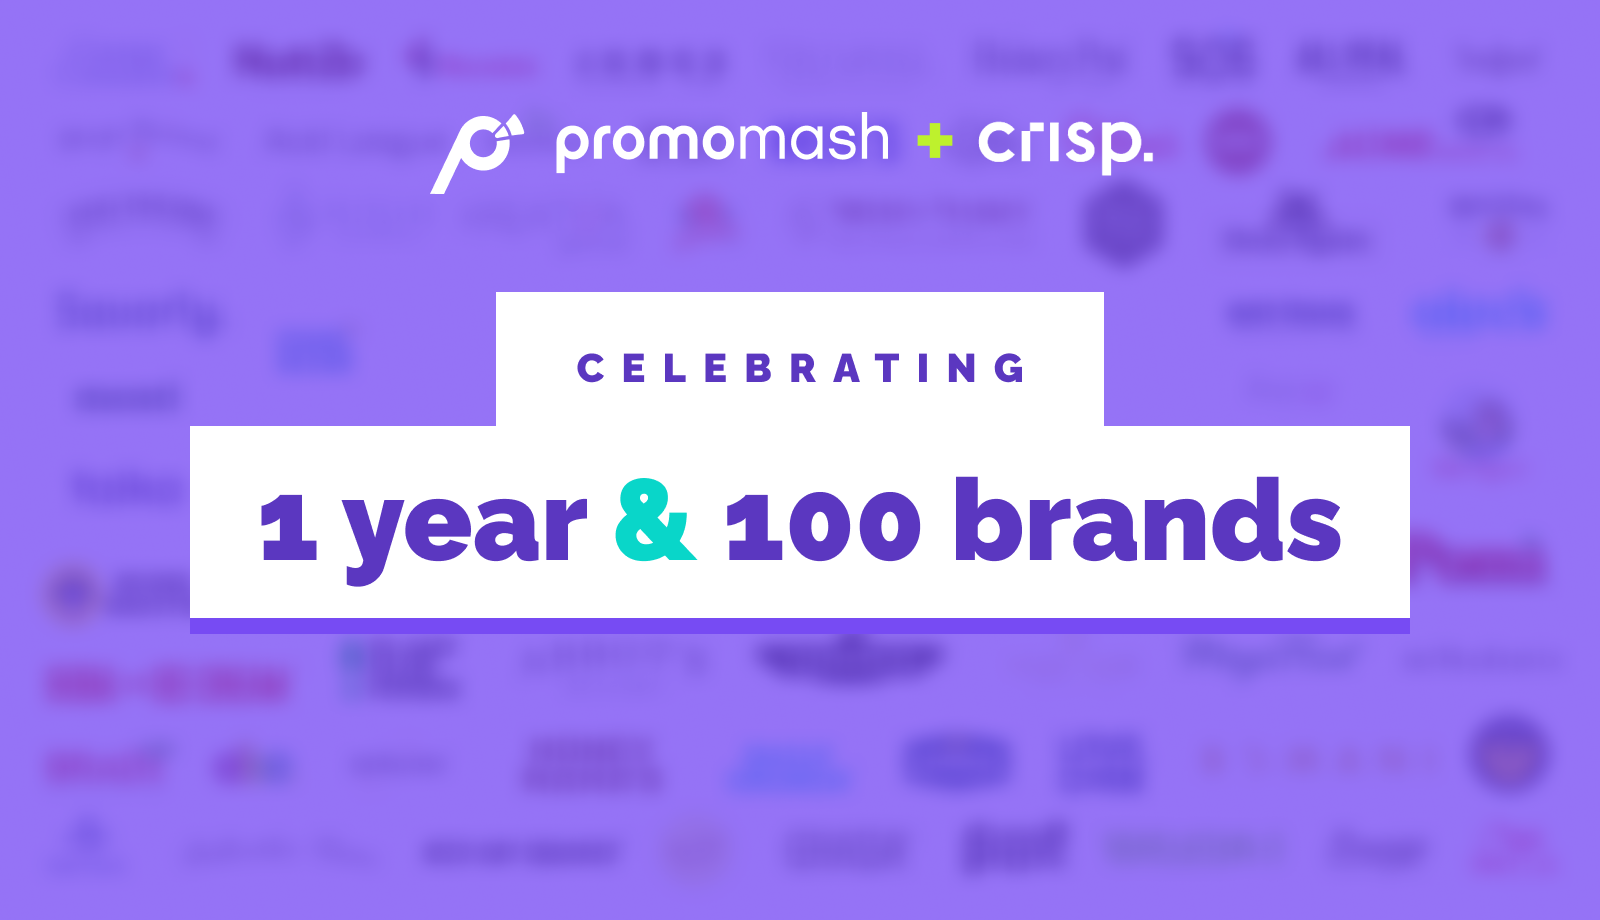 The Promomash + Crisp Partnership Celebrates One Year, a Client Milestone & Industry Award Win